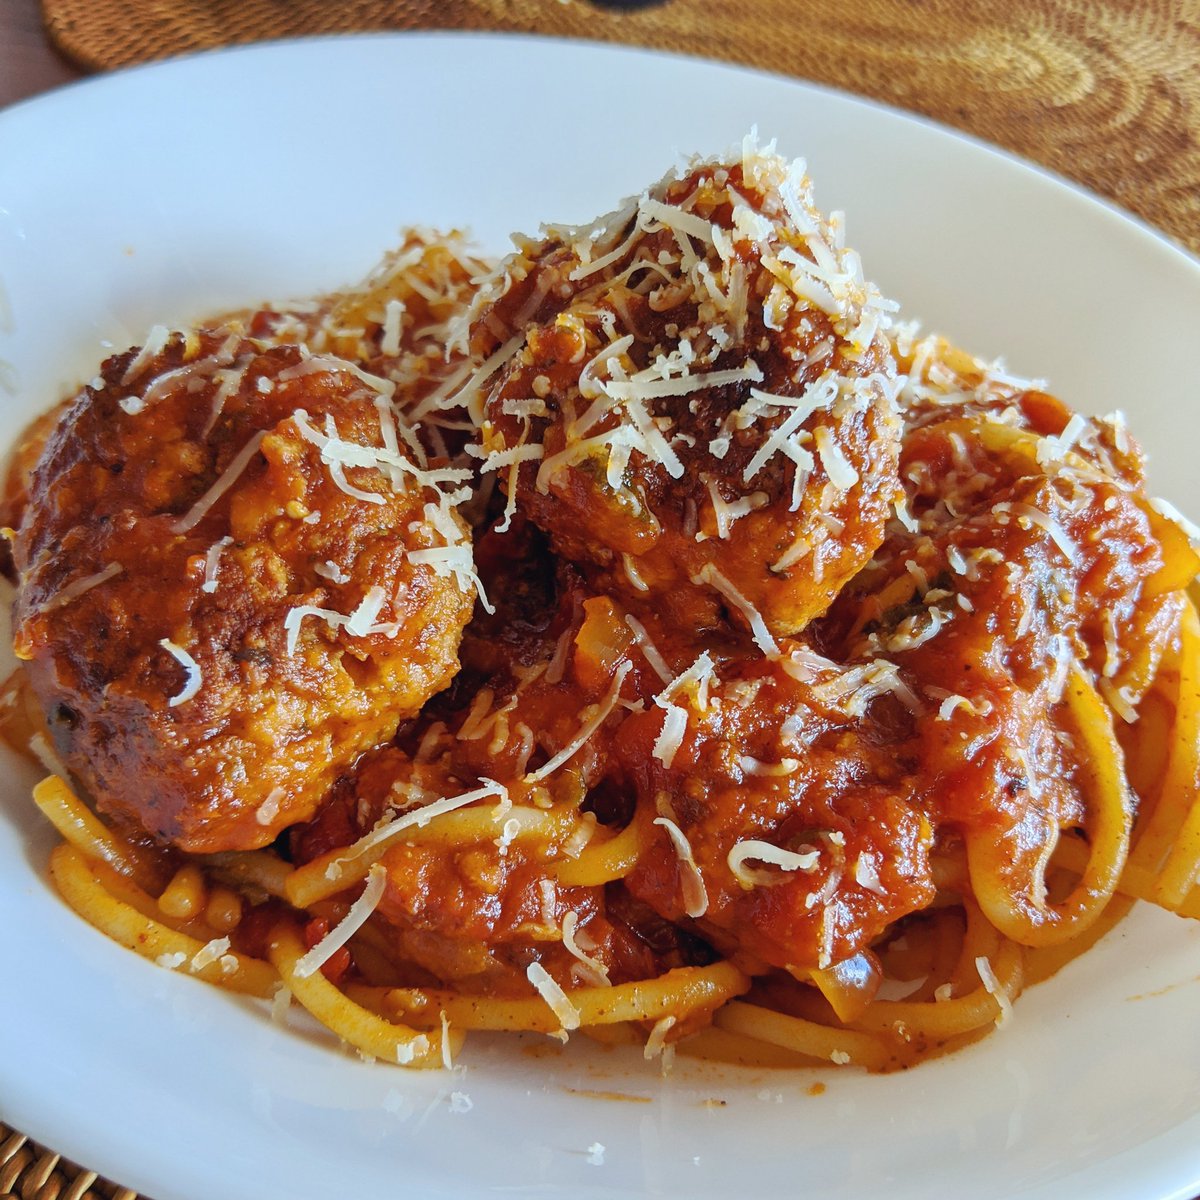 Spaghetti and meatballs 